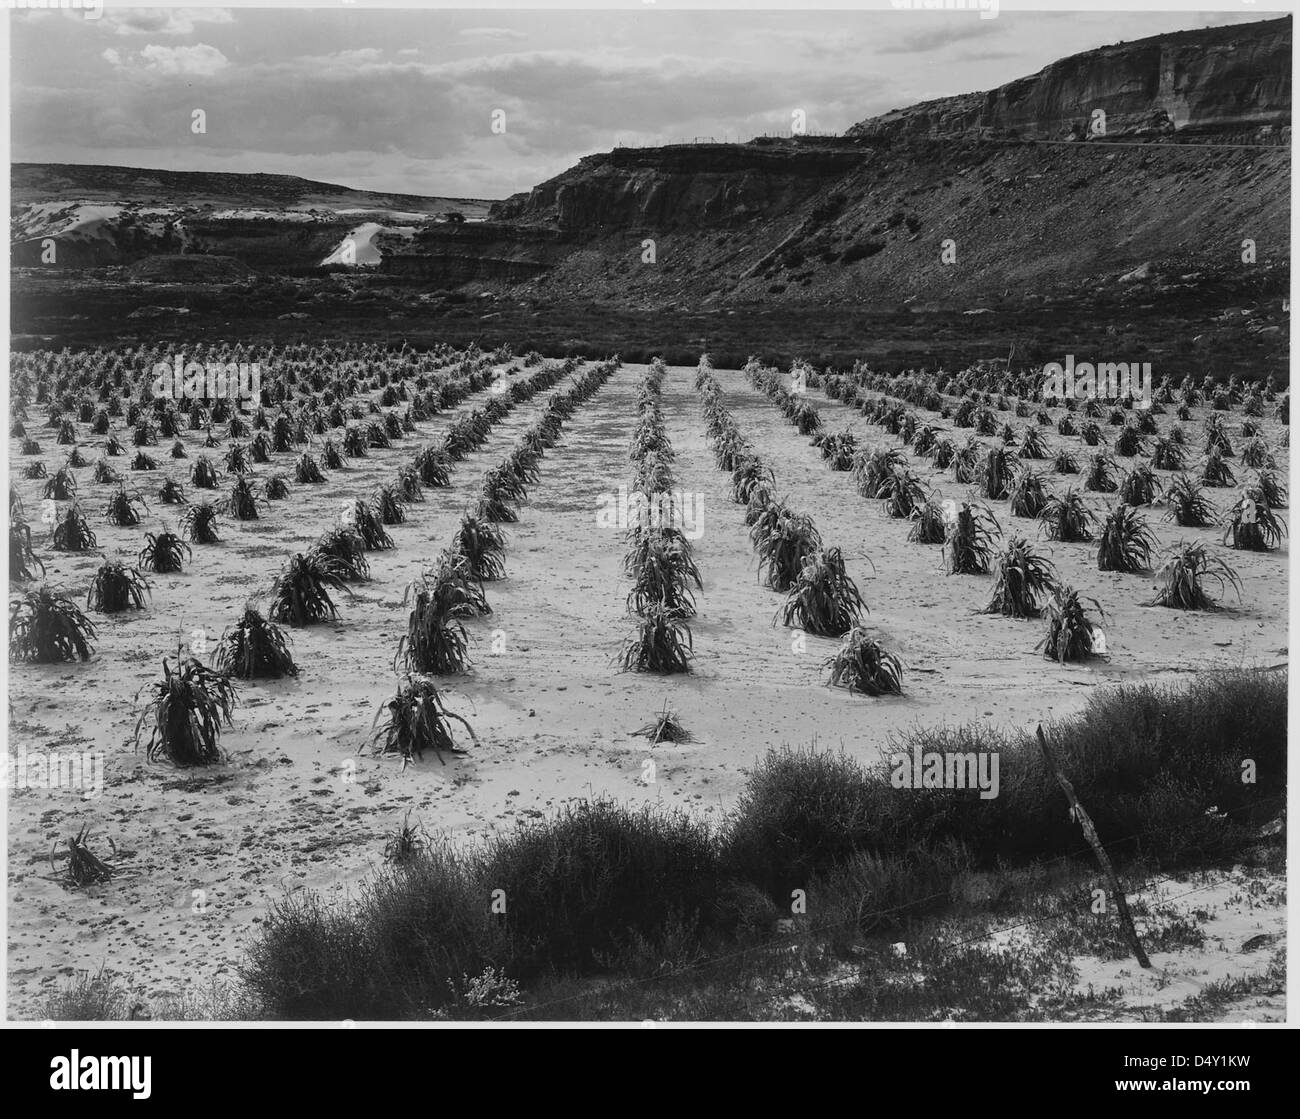 Looking across rows of corn, cliff in background, 'Corn Field, Indian Farm near Tuba City, Arizona, in Rain, 1941.' Stock Photo